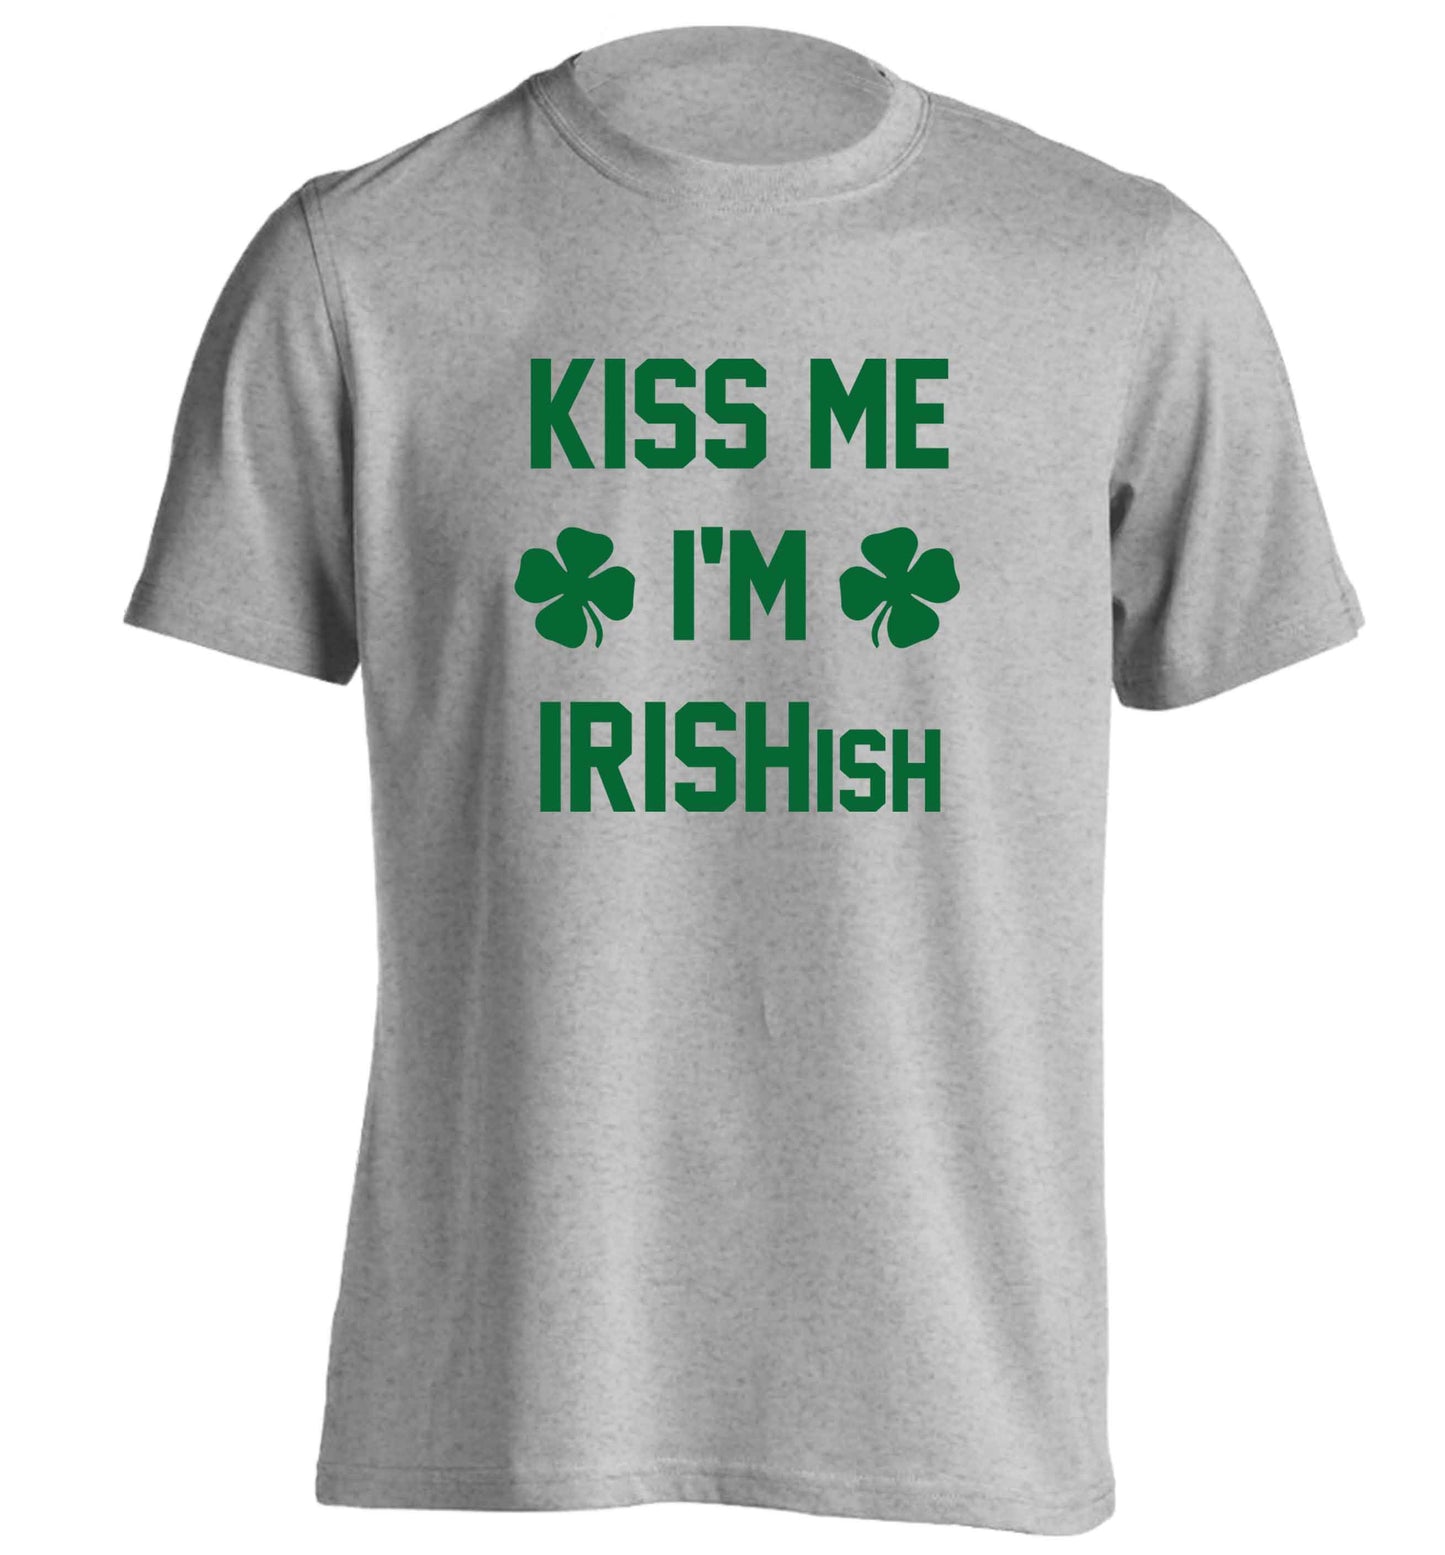 Kiss me I'm Irishish adults unisex grey Tshirt 2XL